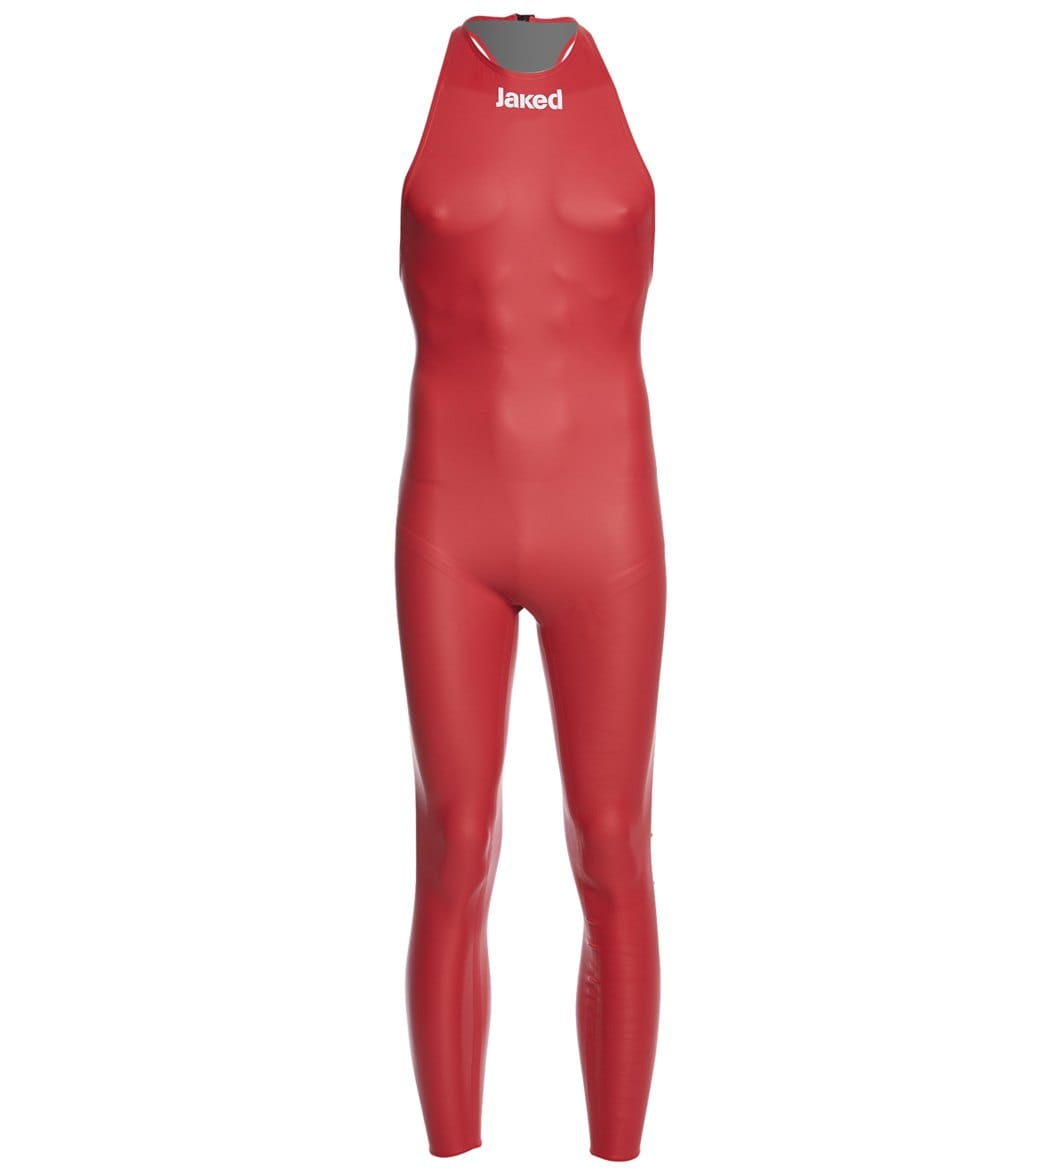 Jaked Men's Reloaded Full Body Tech Suit Swimsuit at SwimOutlet.com